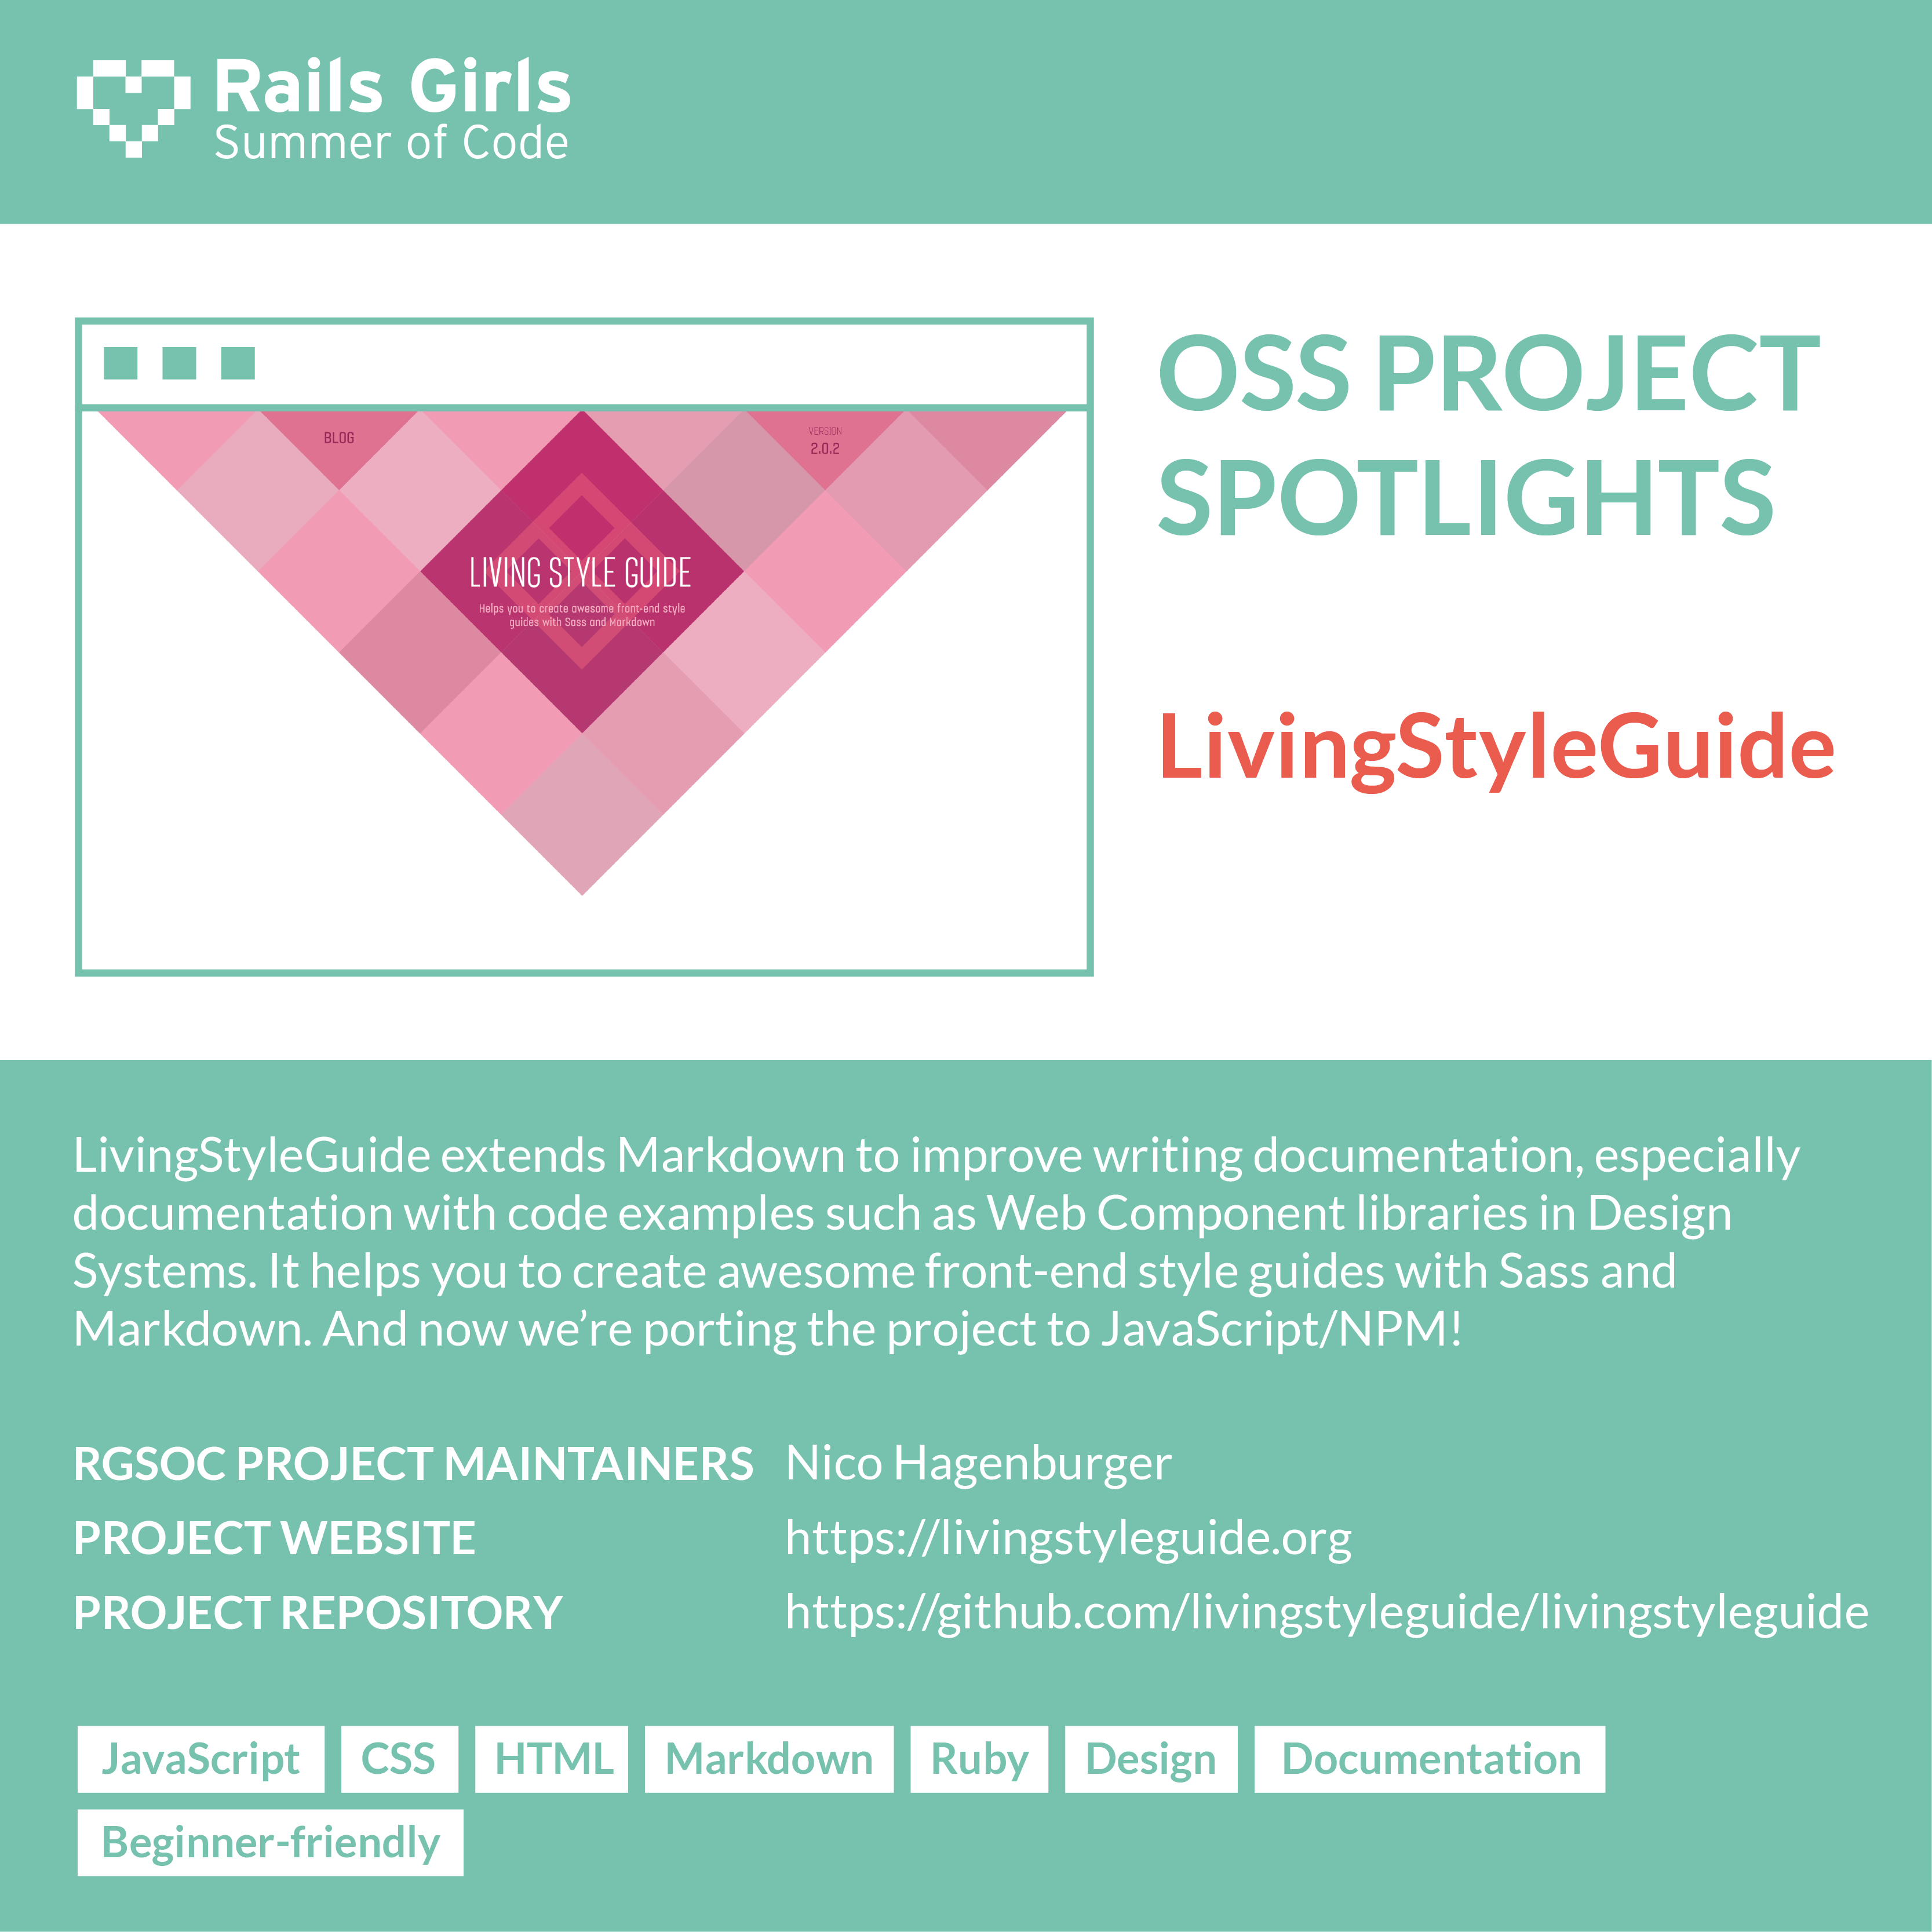 OSS Project Spotlight: LivingStyleGuide